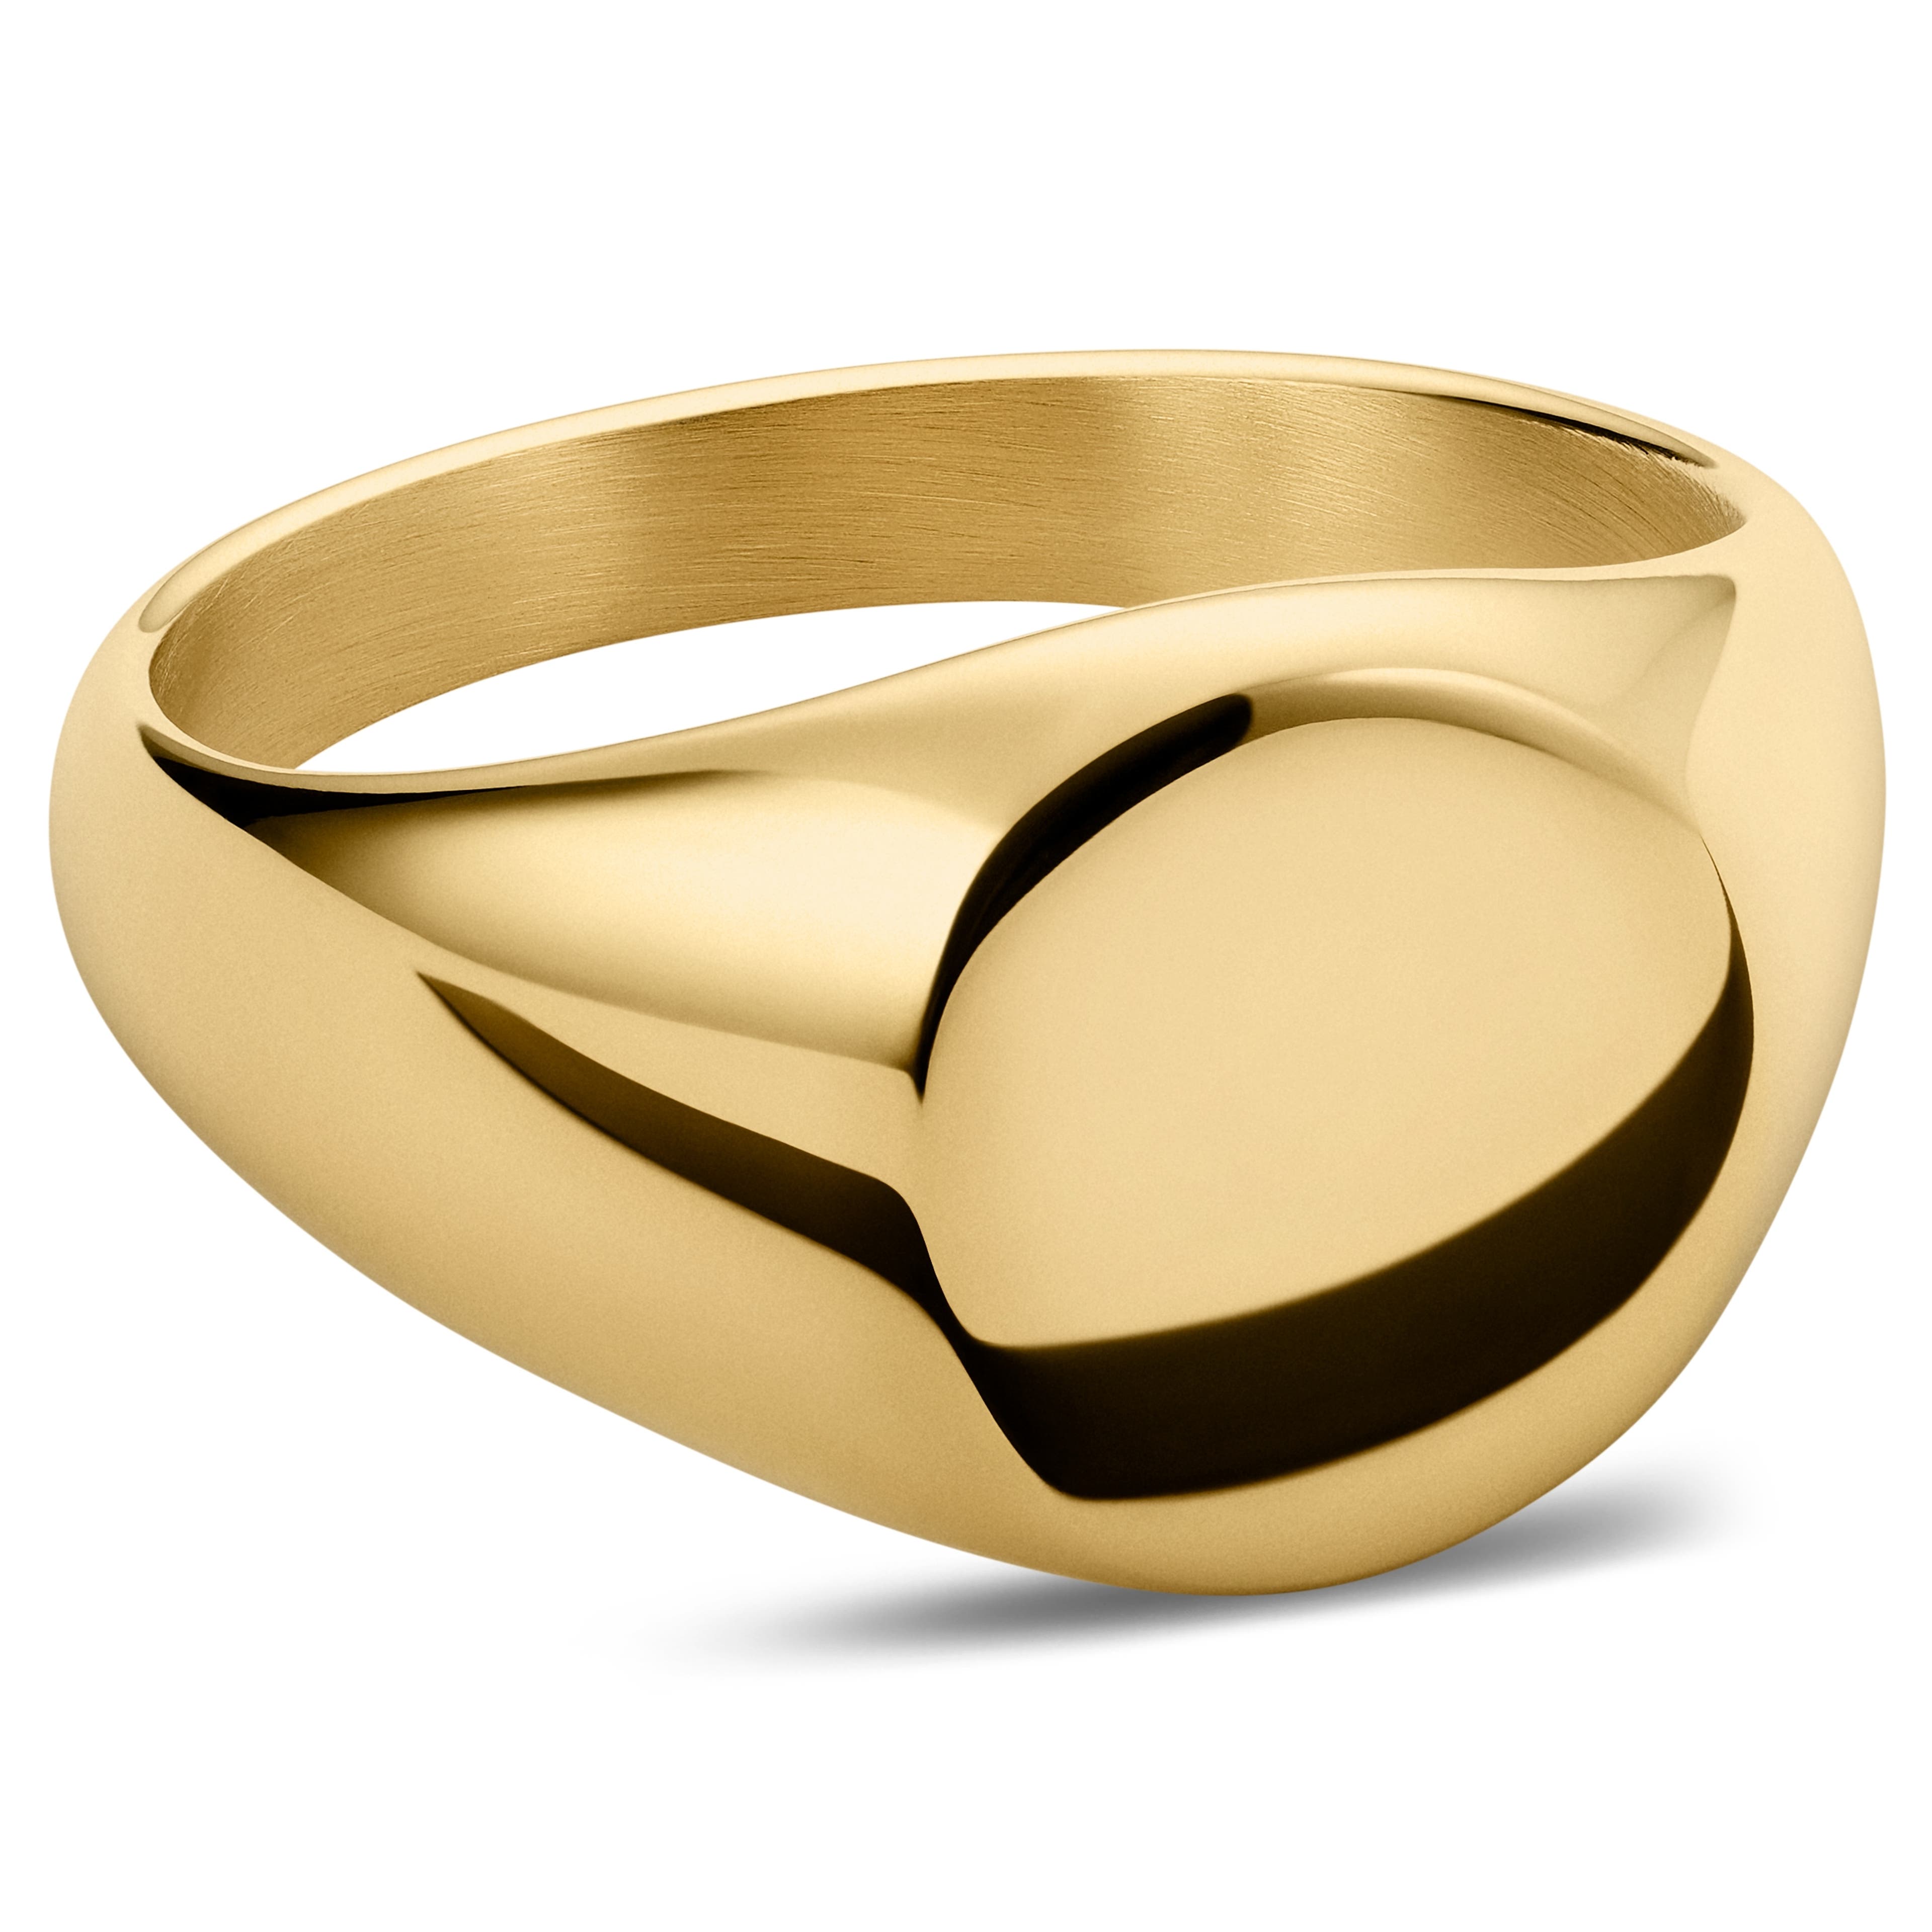 Goldfarbener Mason Ring